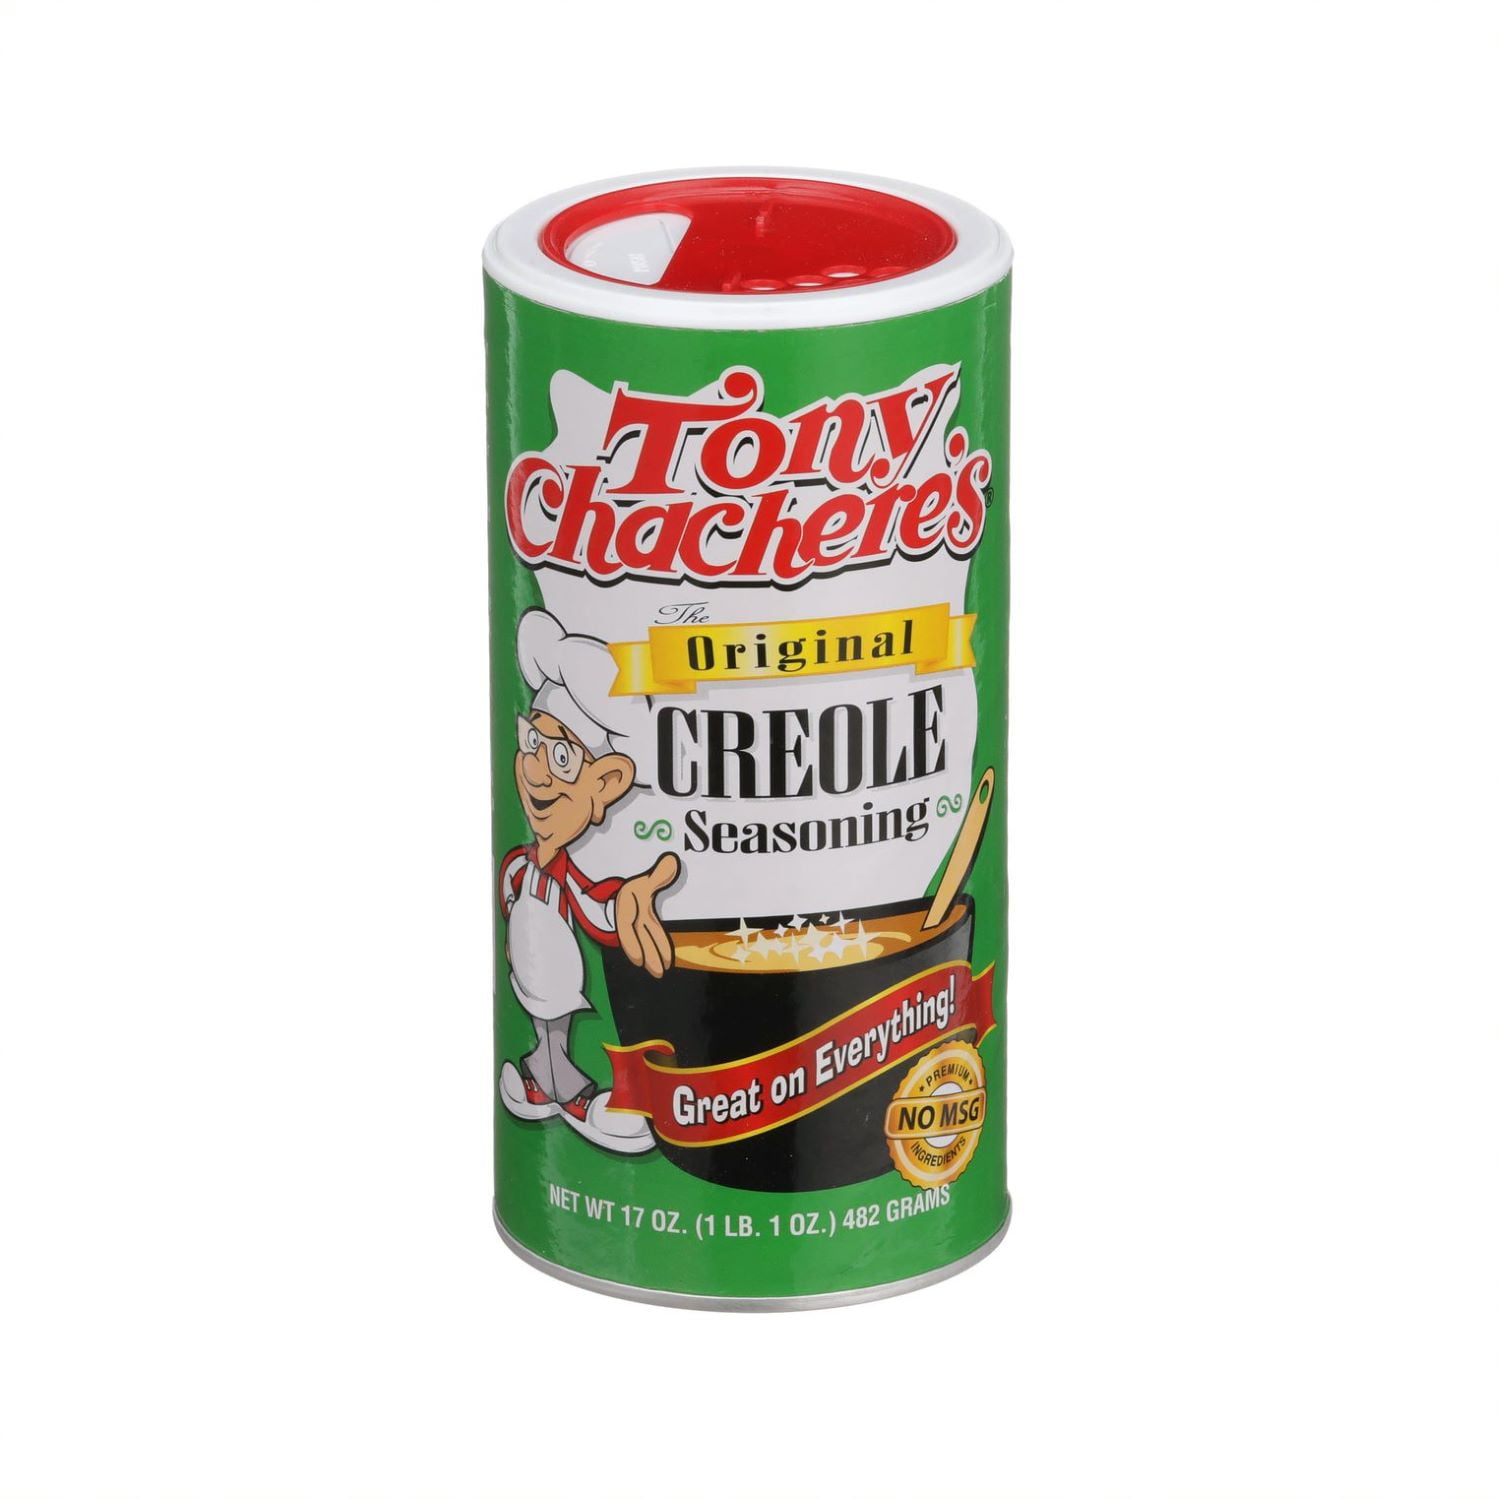 Tony Chachere's Creole Seasoning 17 oz